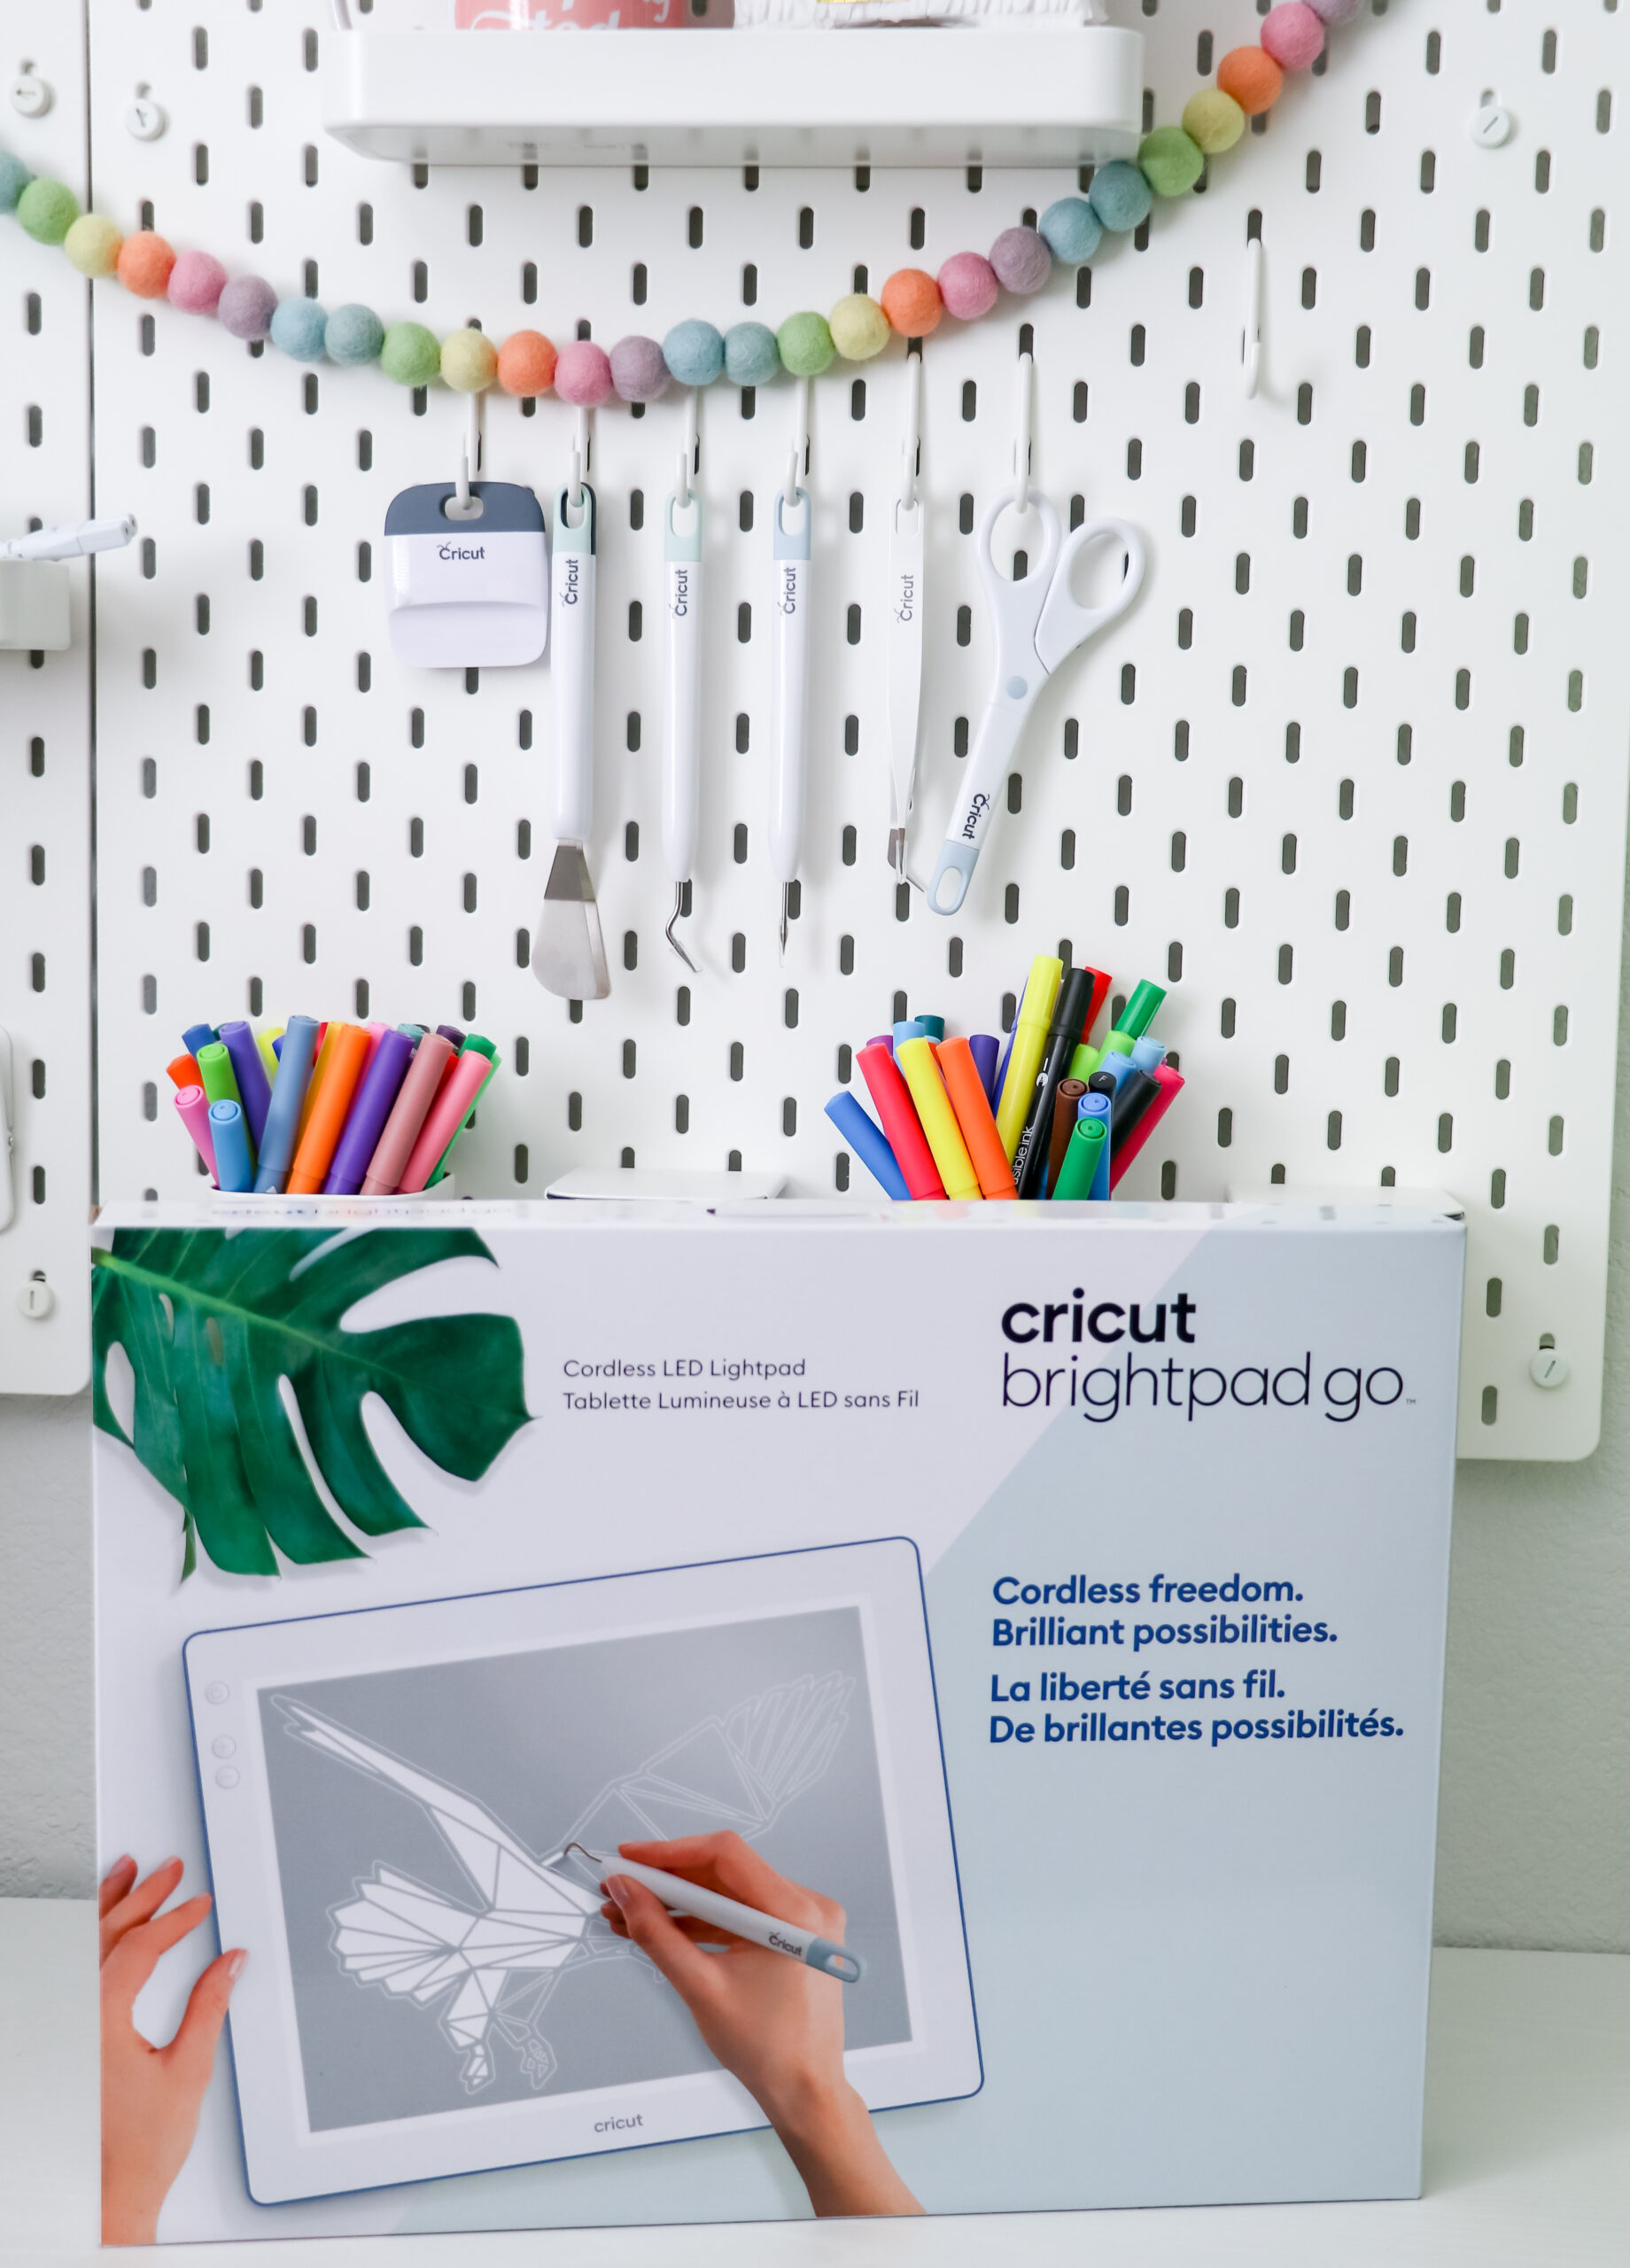 Cricut BrightPad - Overview and Basics 